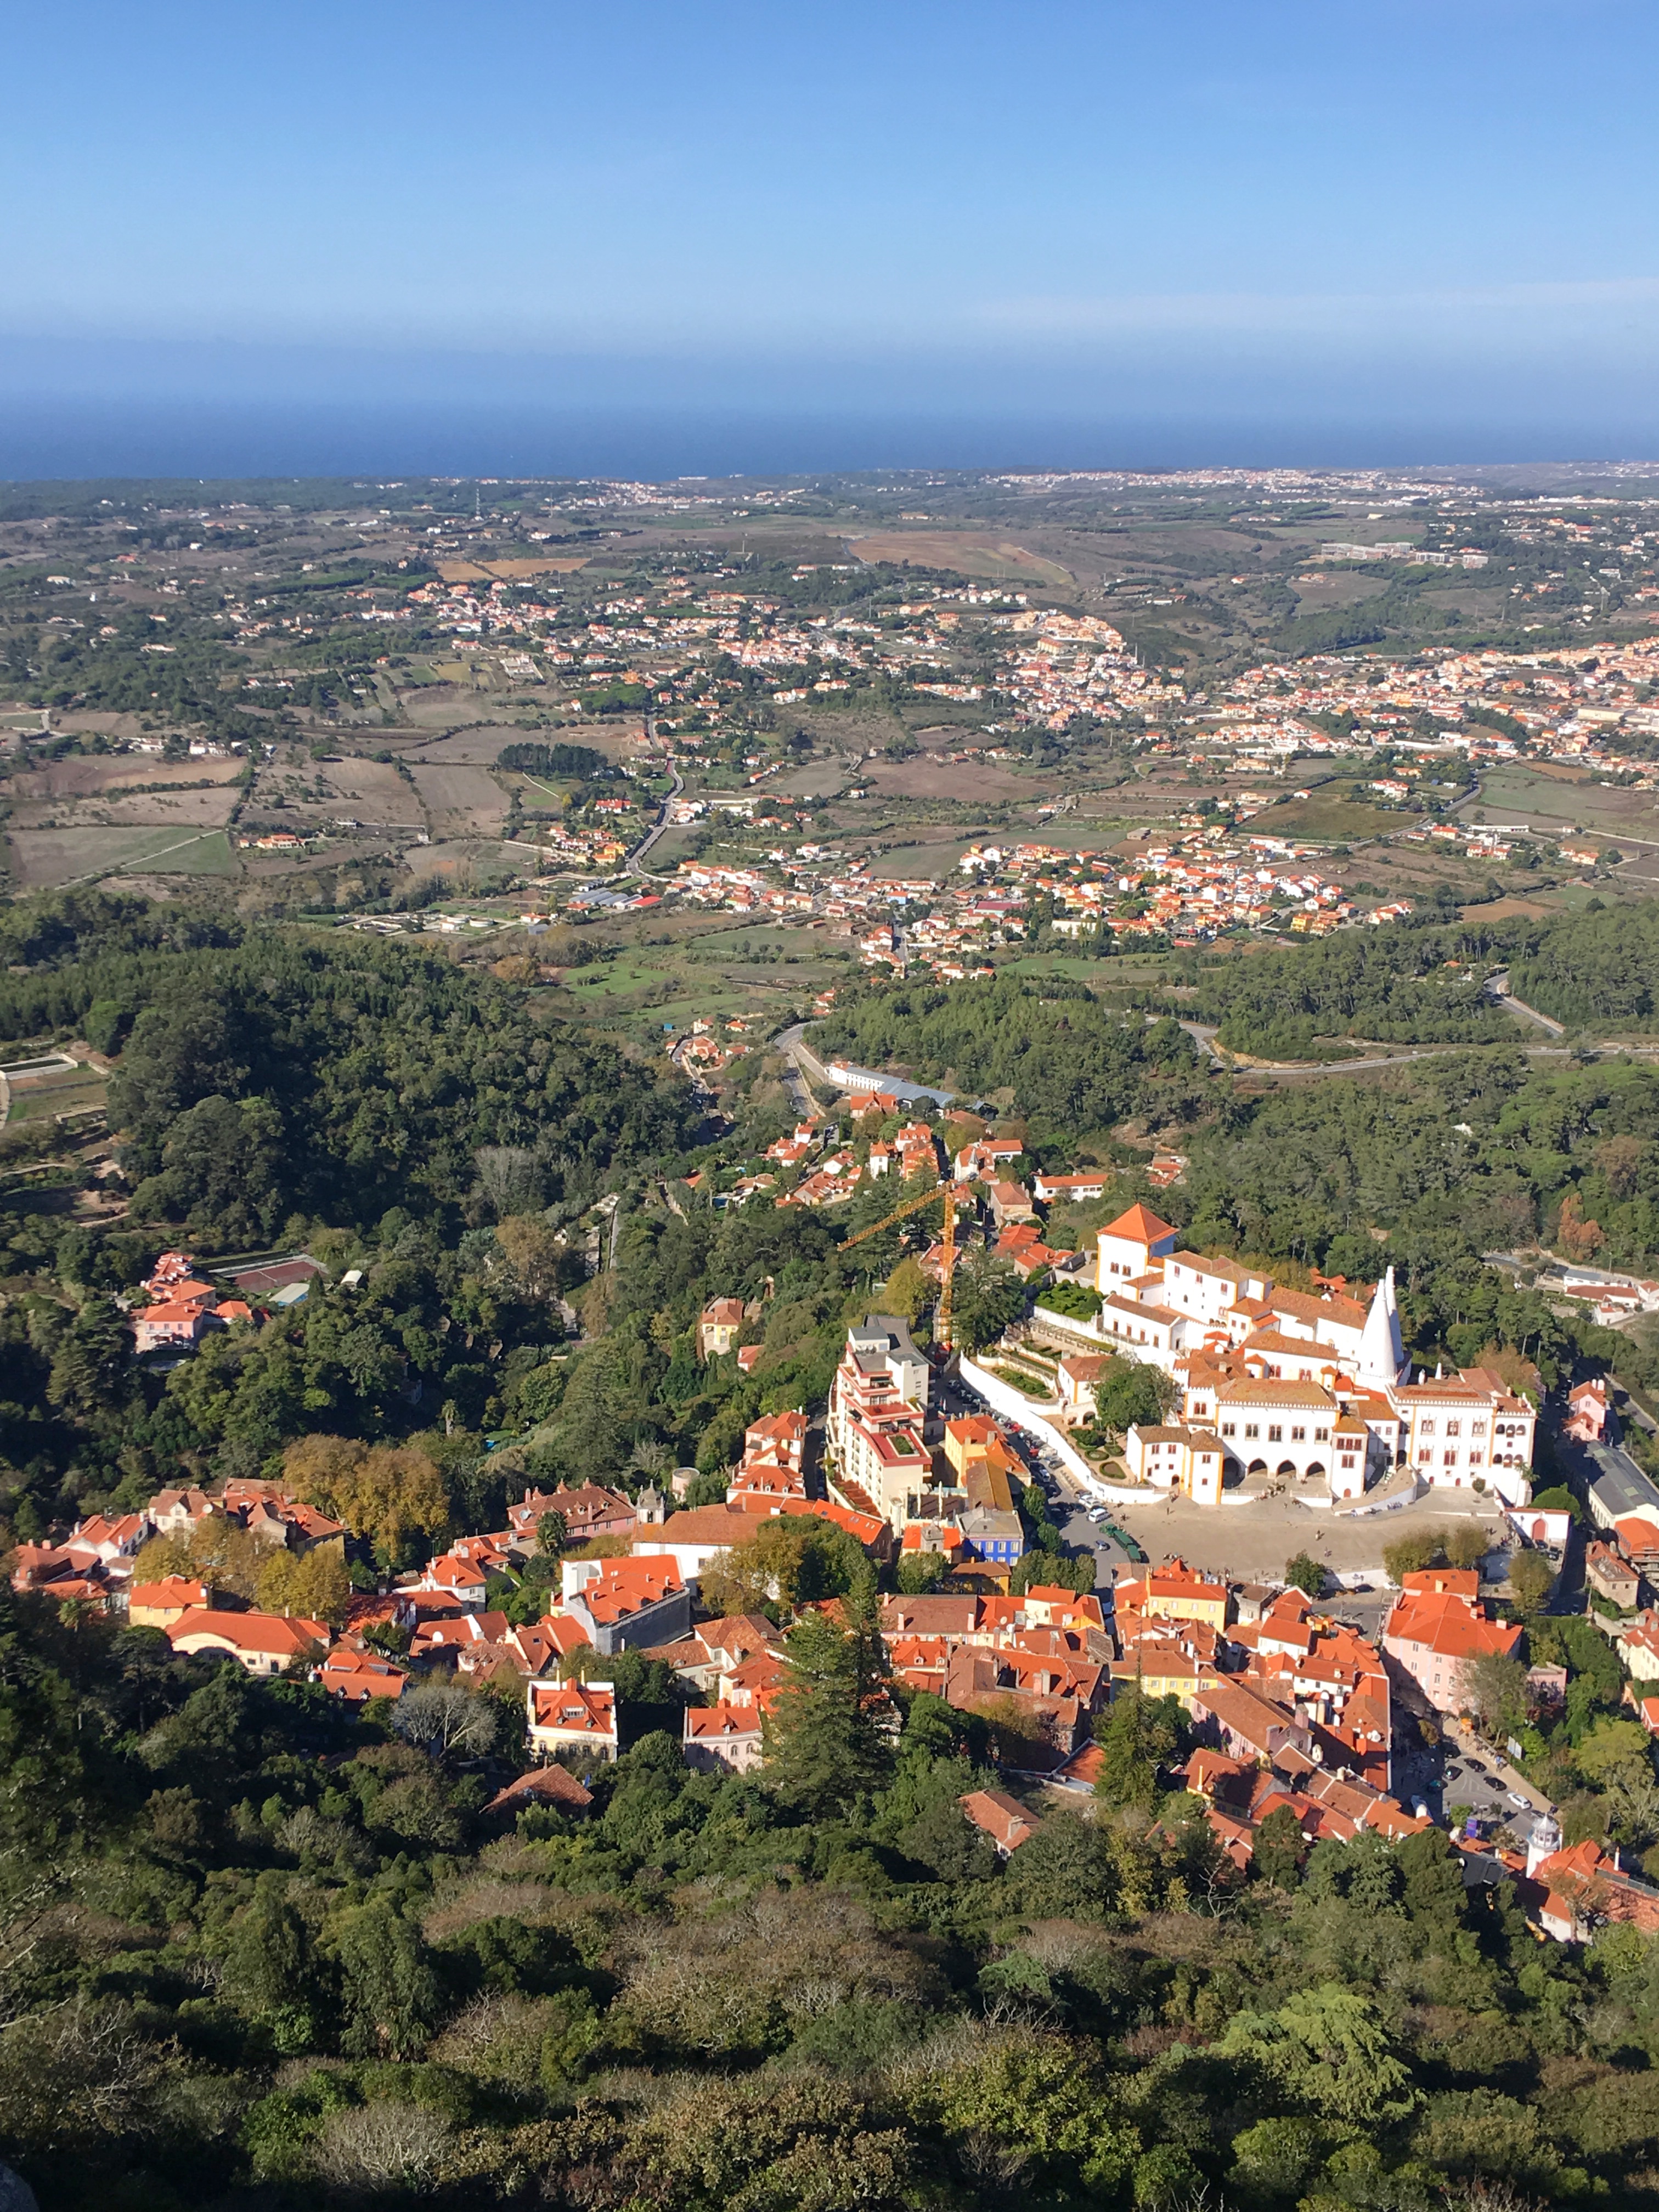 Views of Sintra